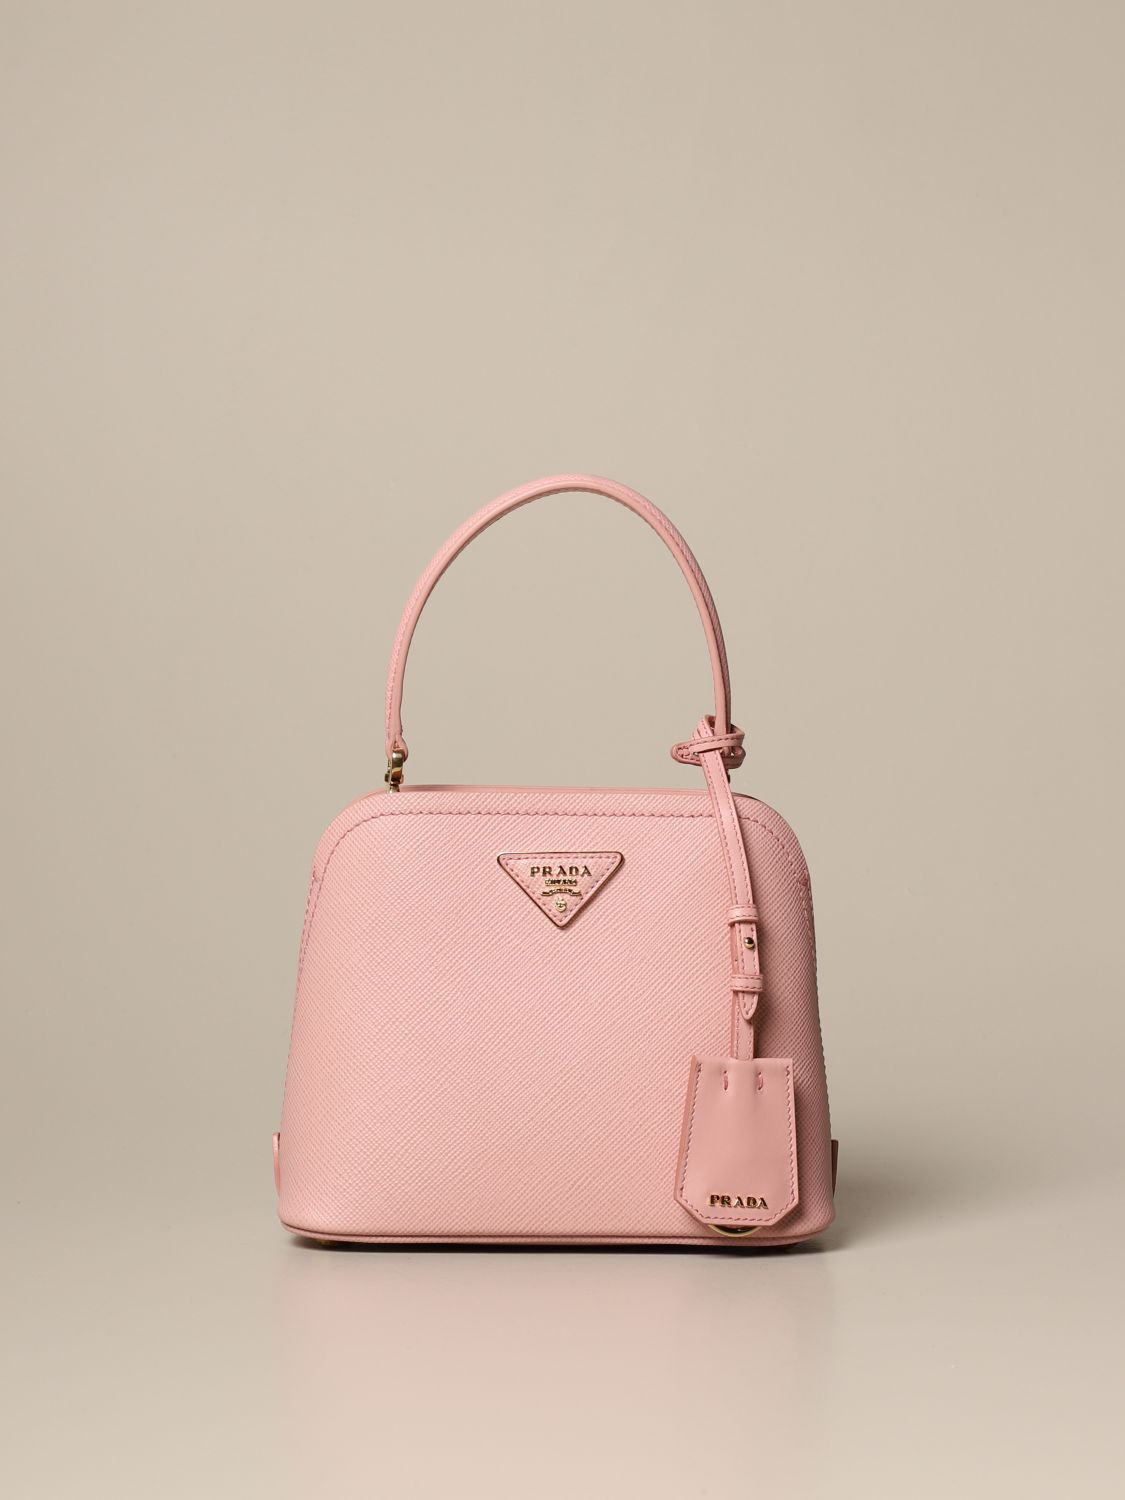 prada pink clutch bag